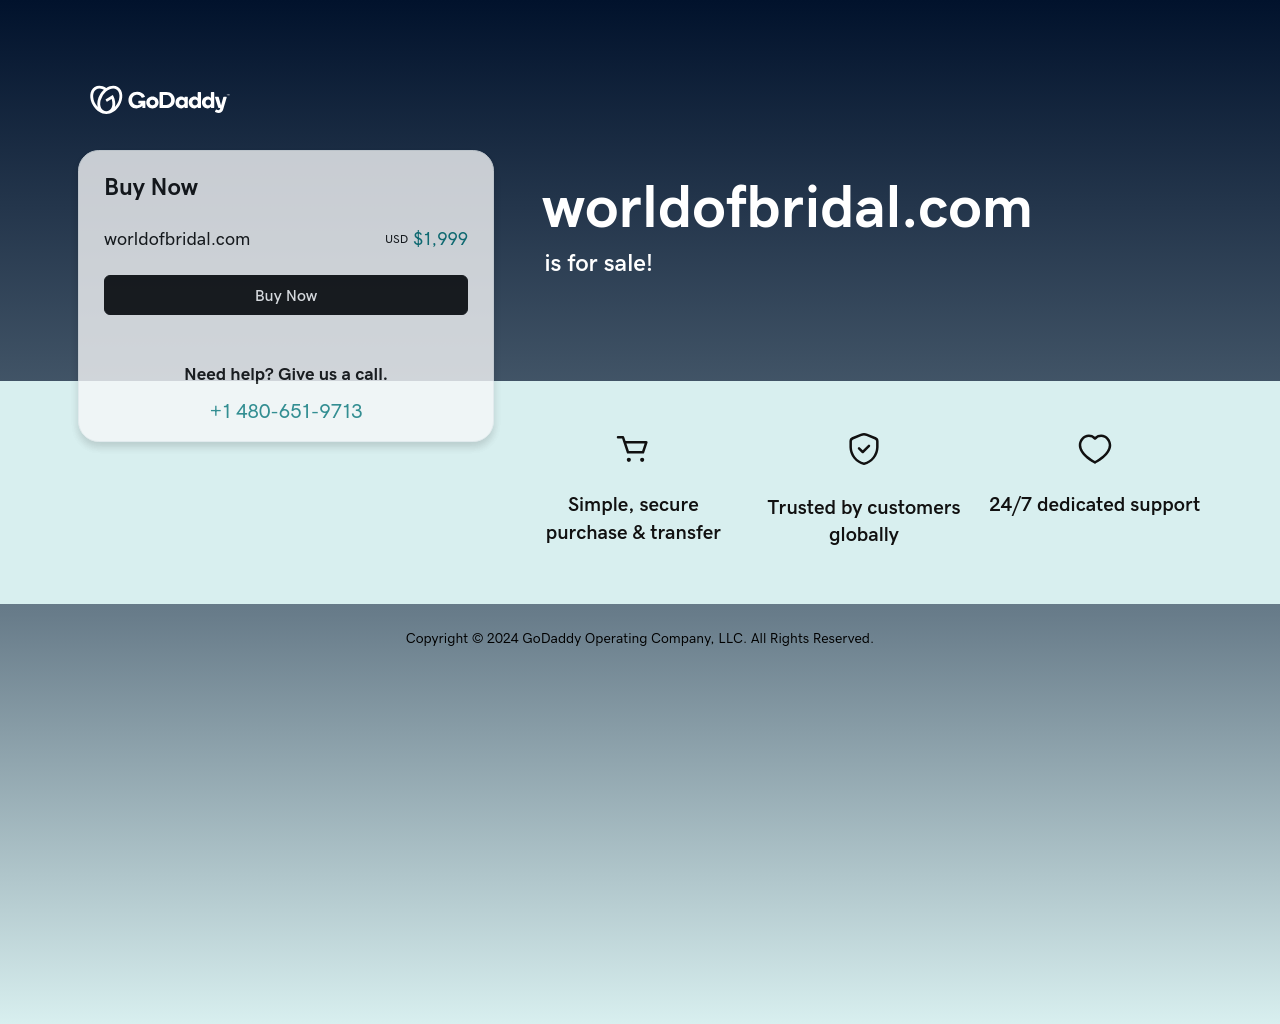 worldofbridal.com